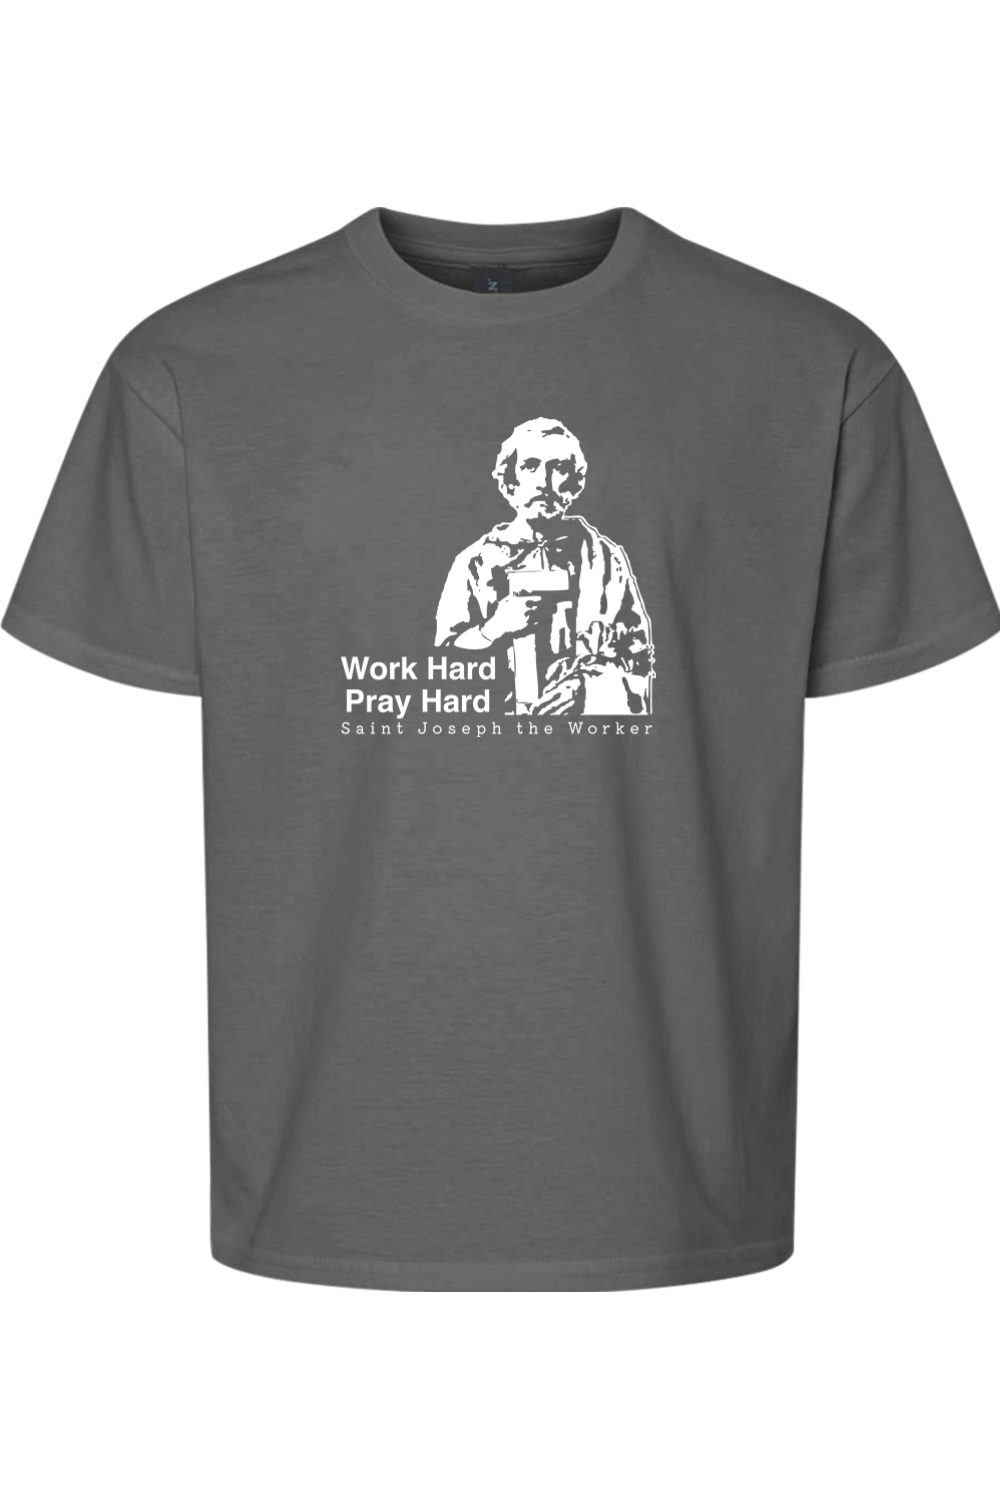 Work Hard Pray Hard - St Joseph the Worker Youth T-Shirt